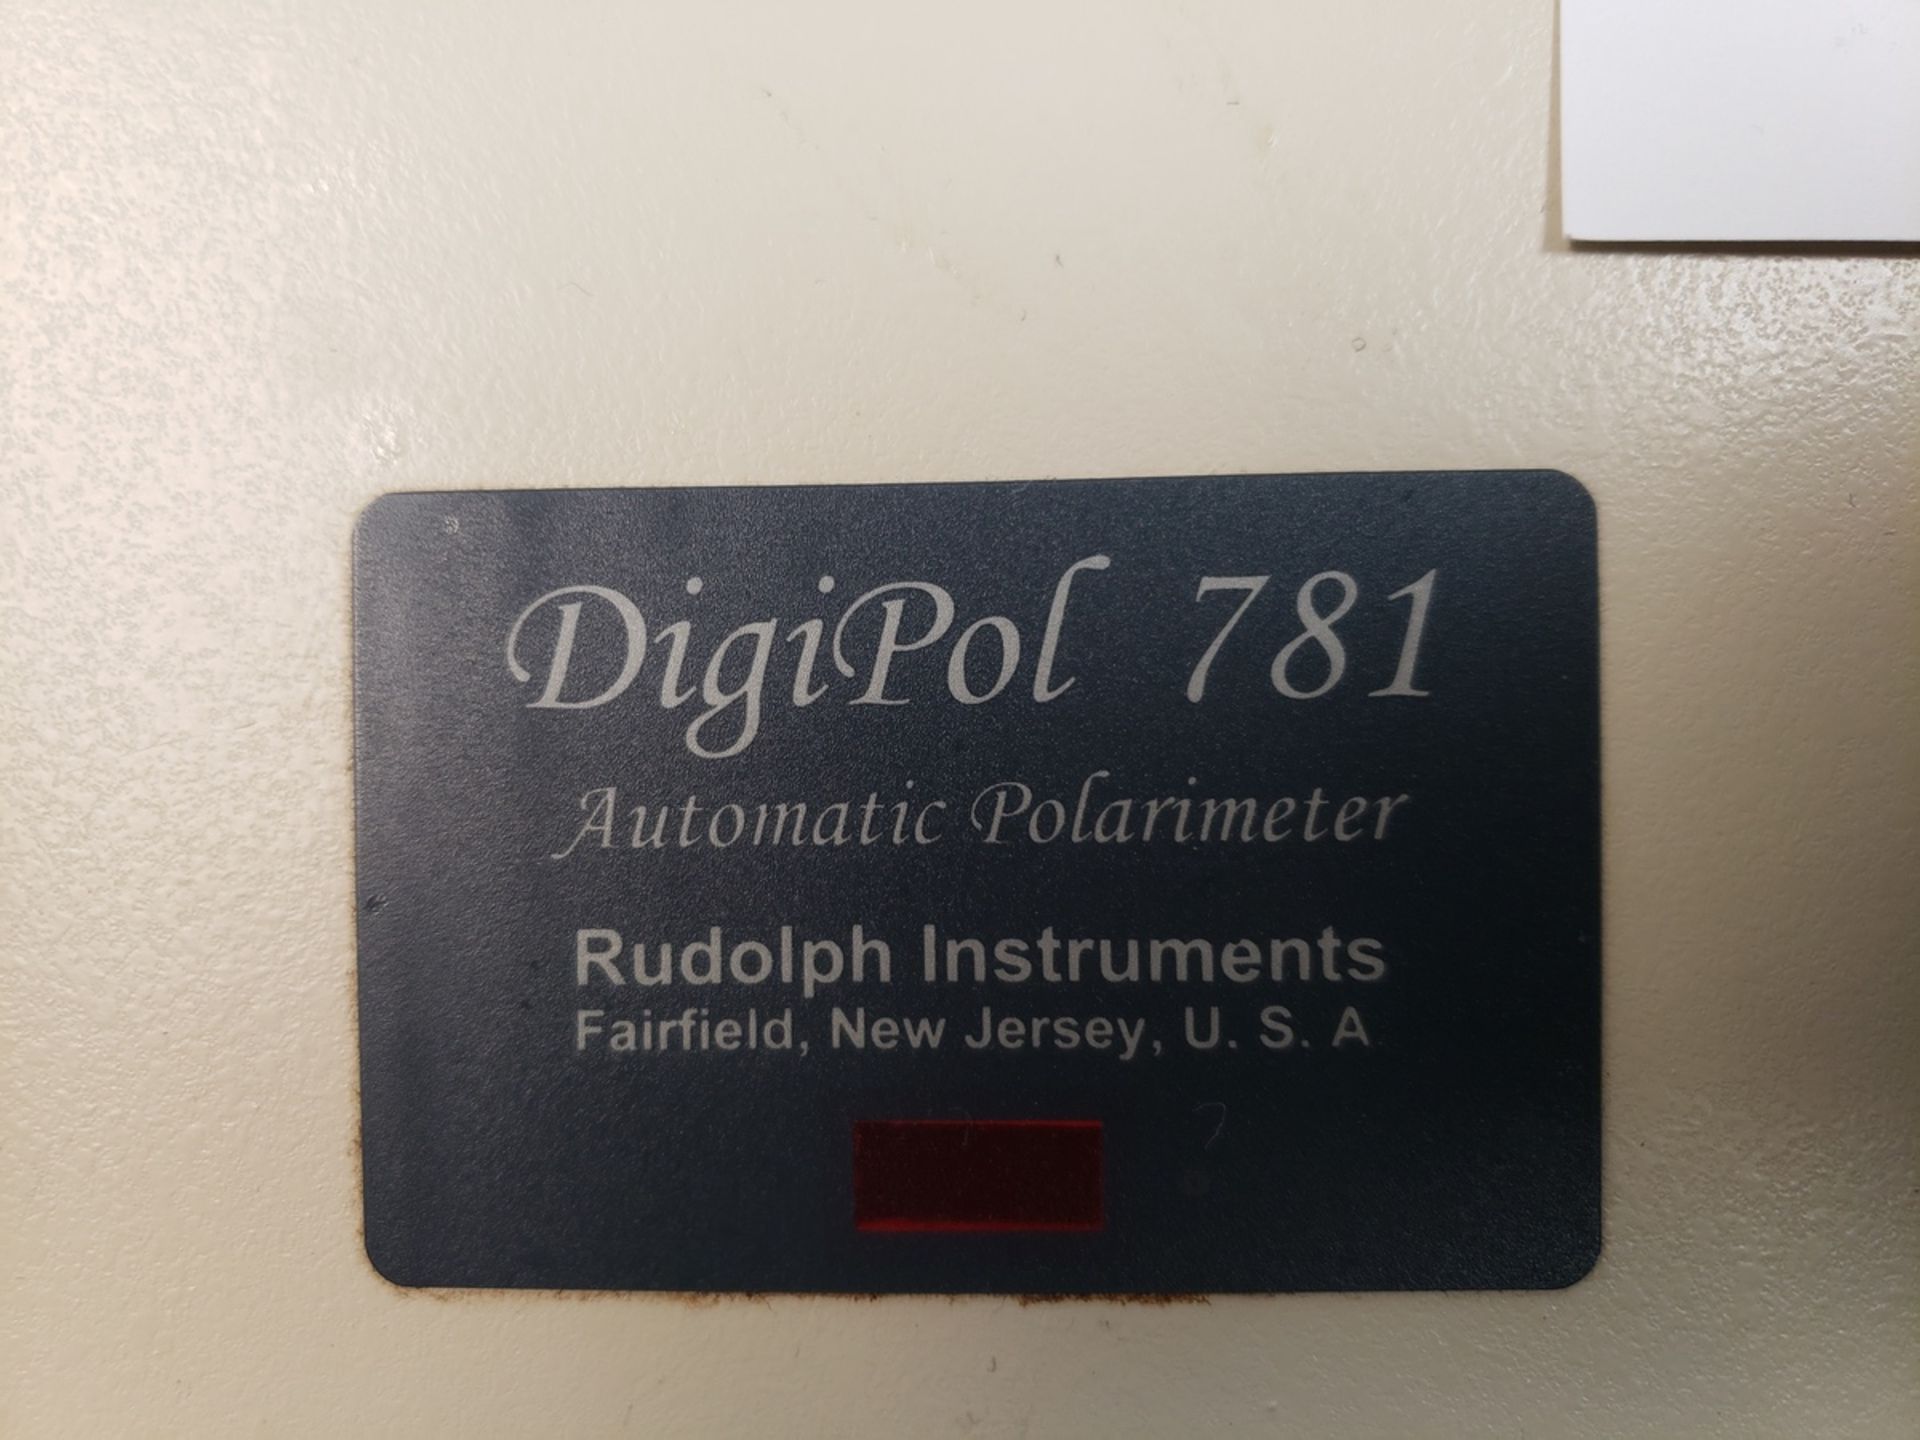 Rudolph Instruments GigiPol 781 Automatic Polarimeter - Image 2 of 3